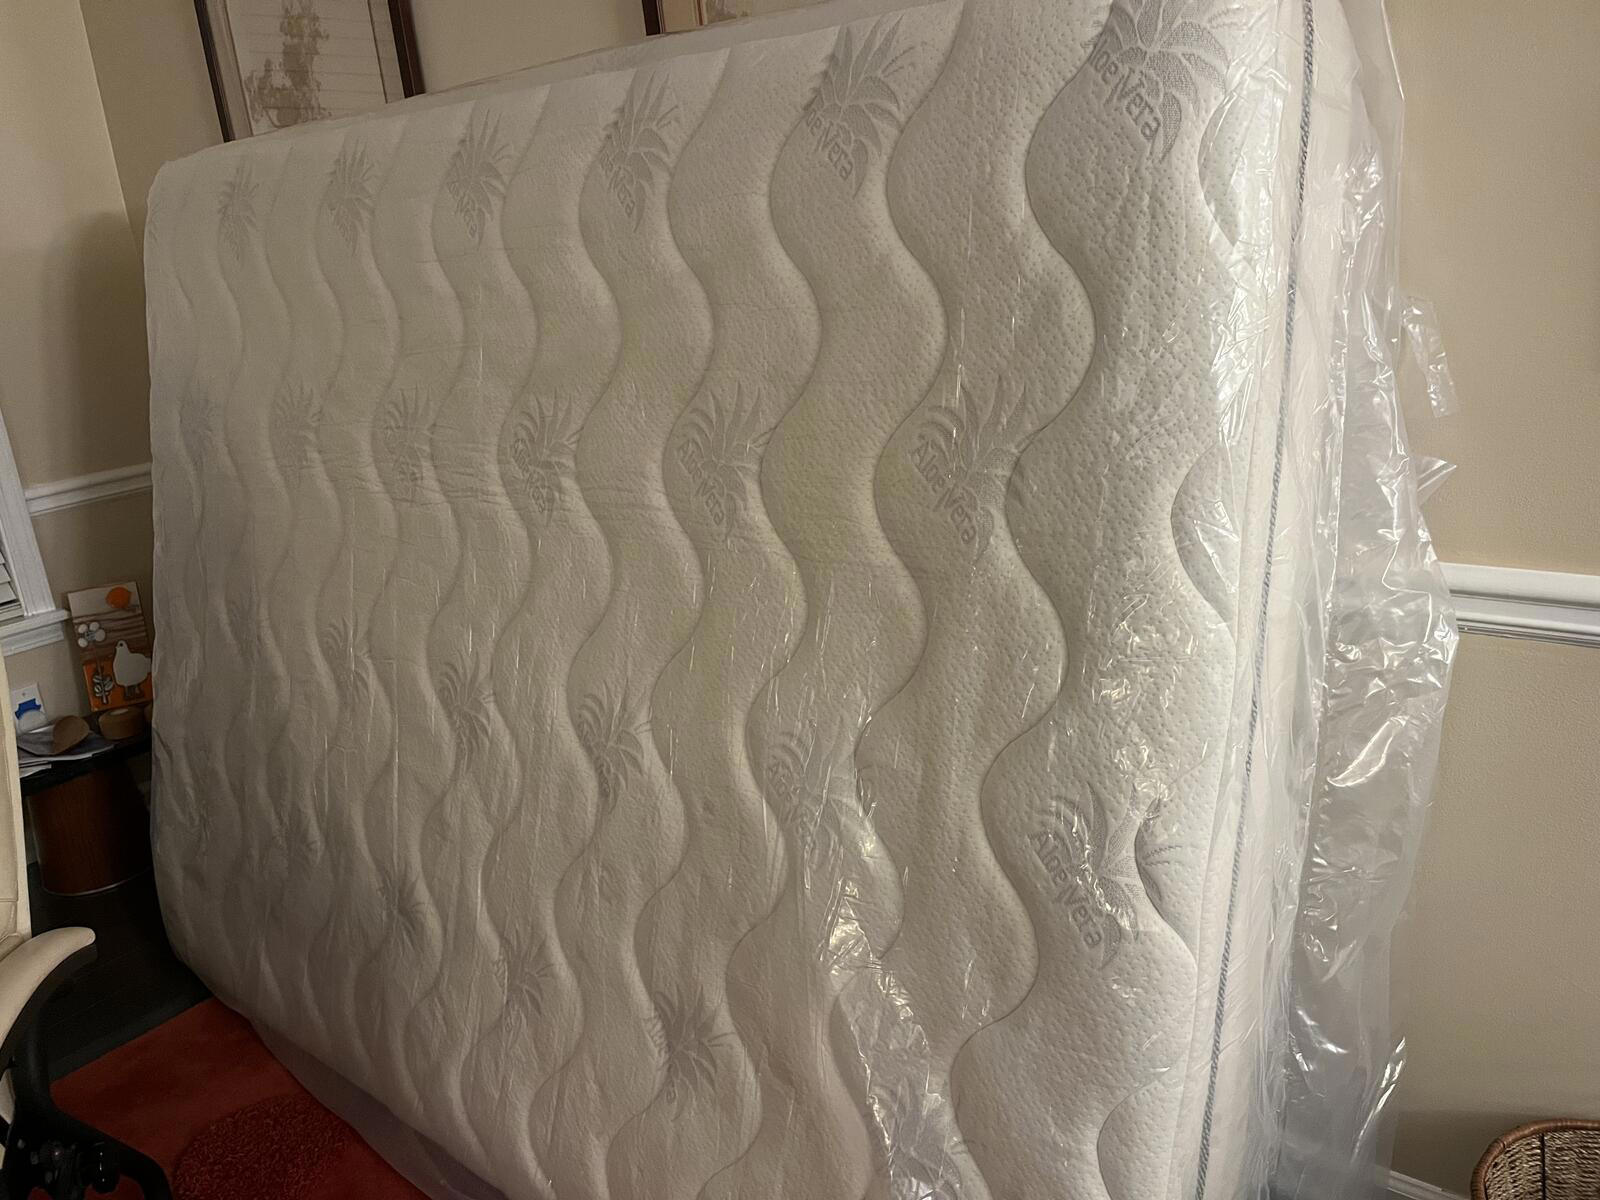 foam mattress by christopher knight home